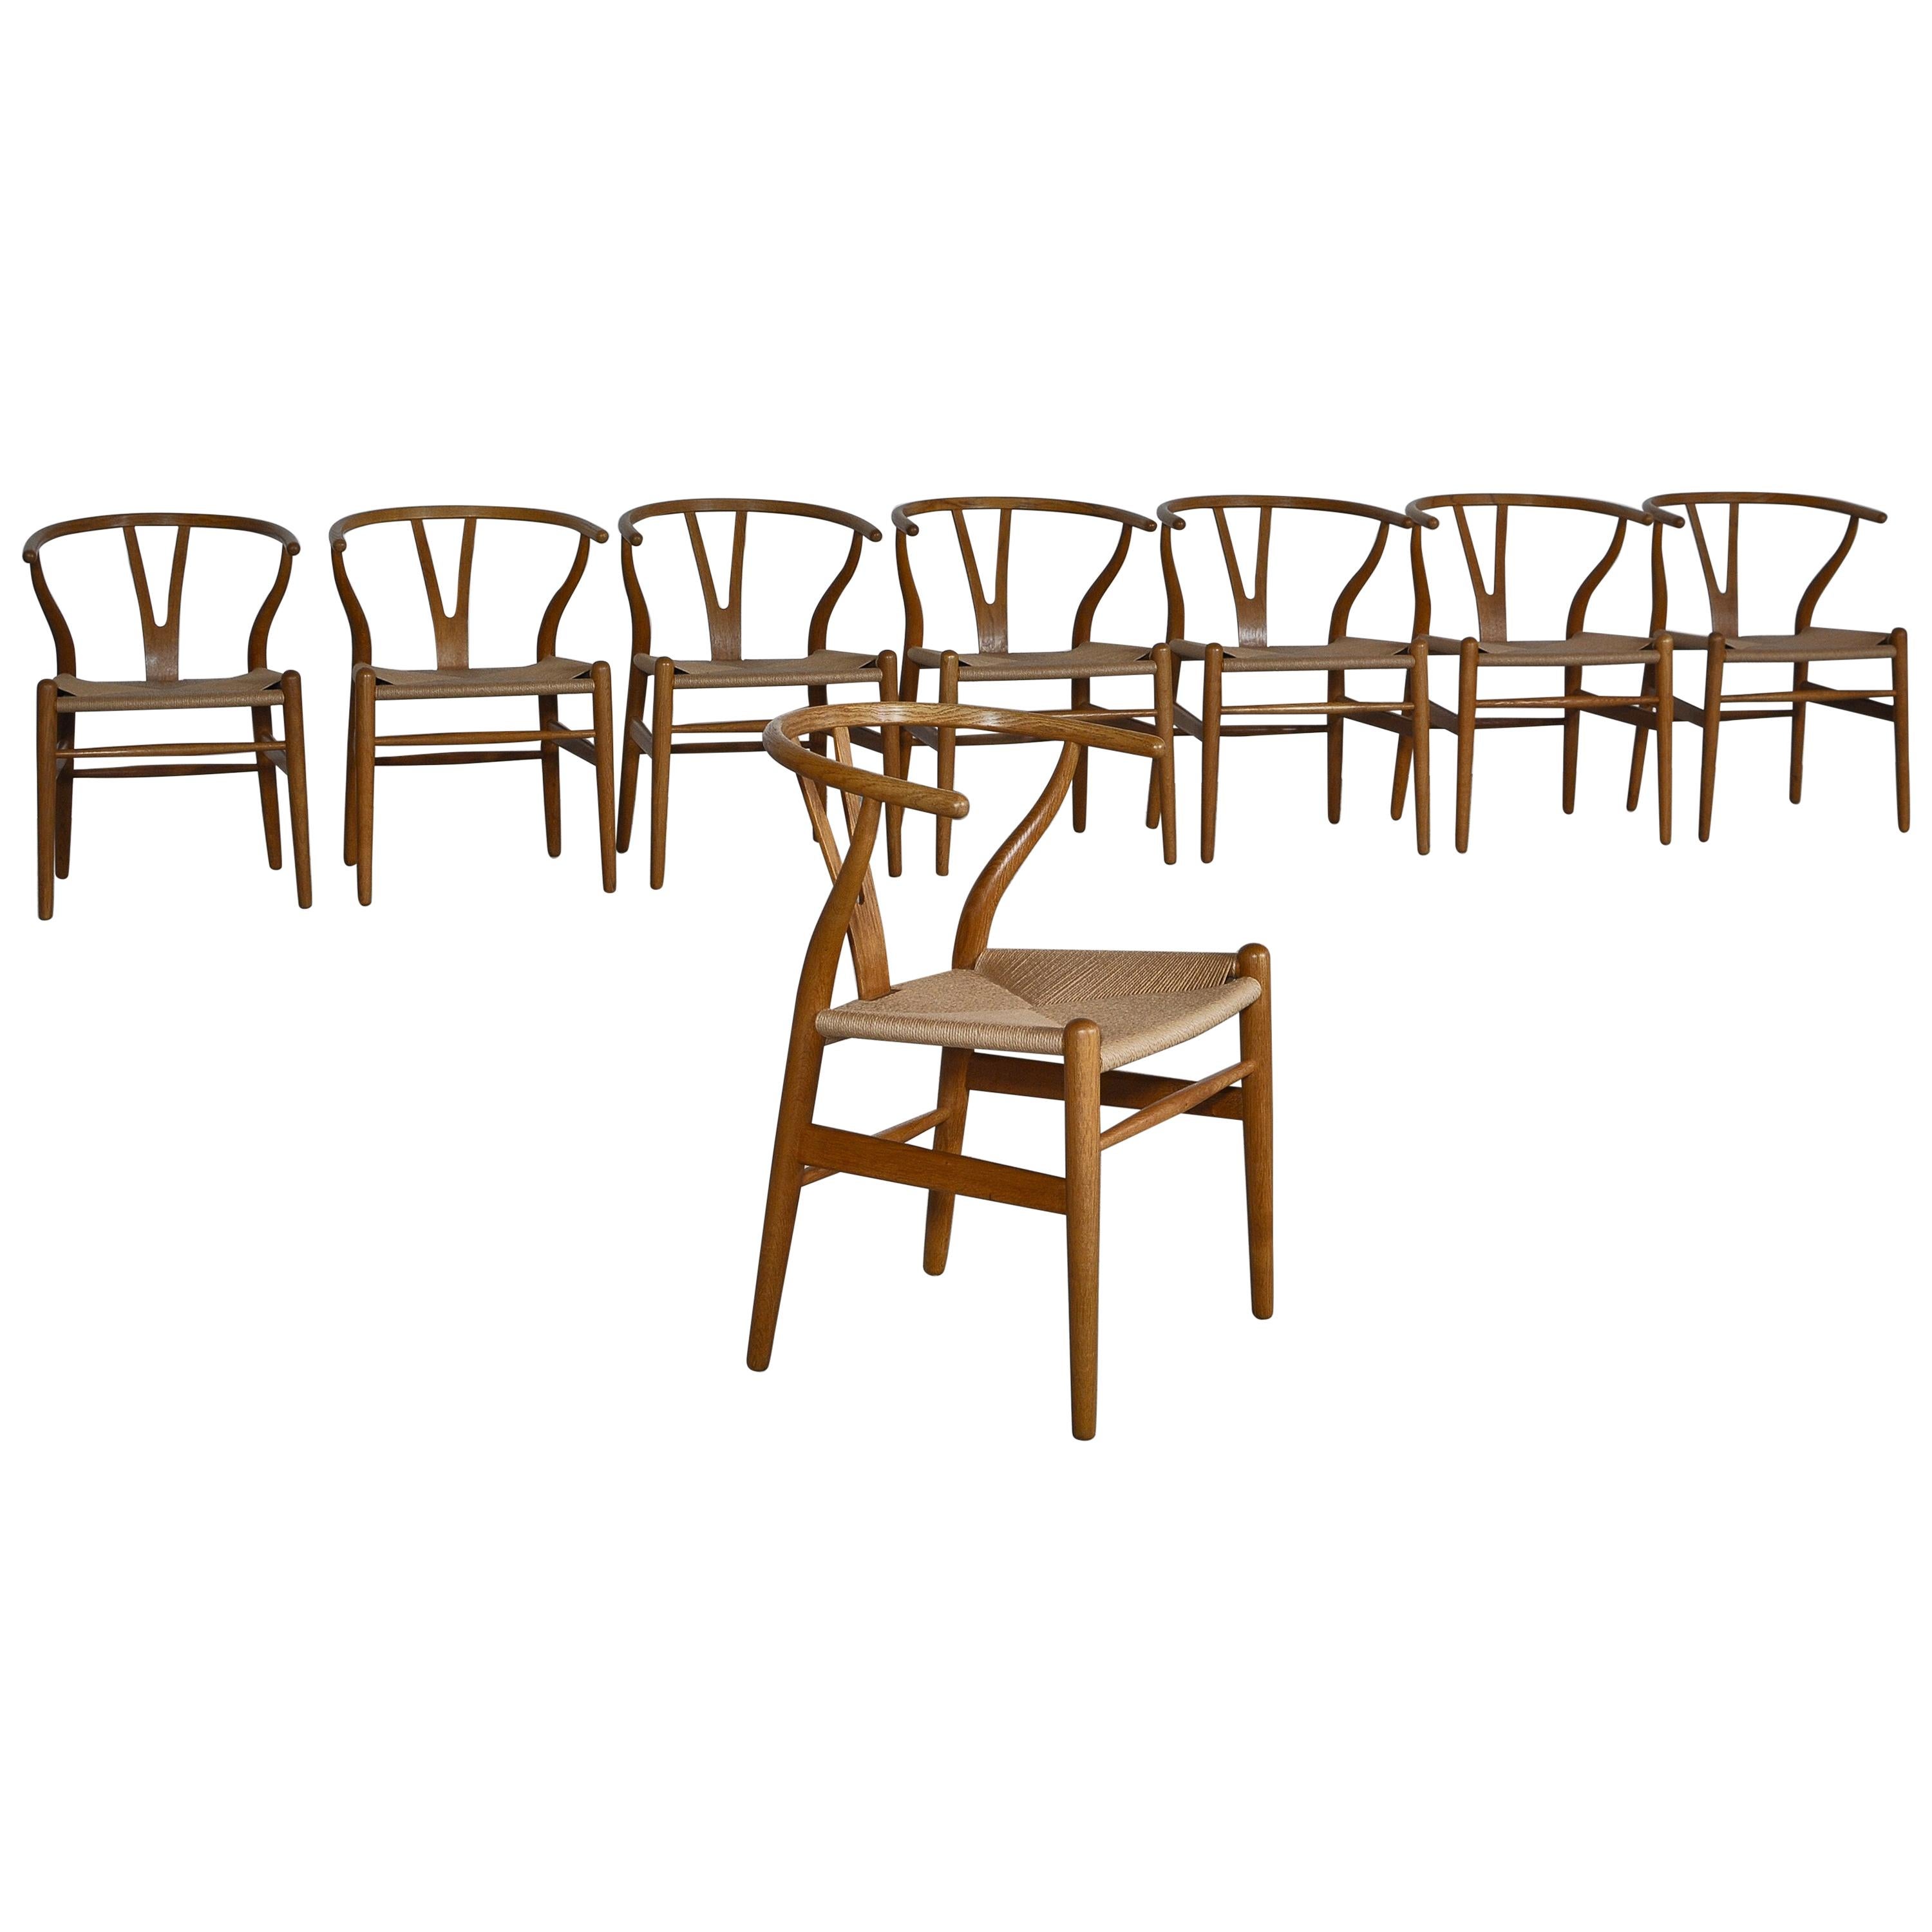 Hans J. Wegner Set of 8 Early Stamped Carl Hansen & Sons Wishbone Chairs, 1950s